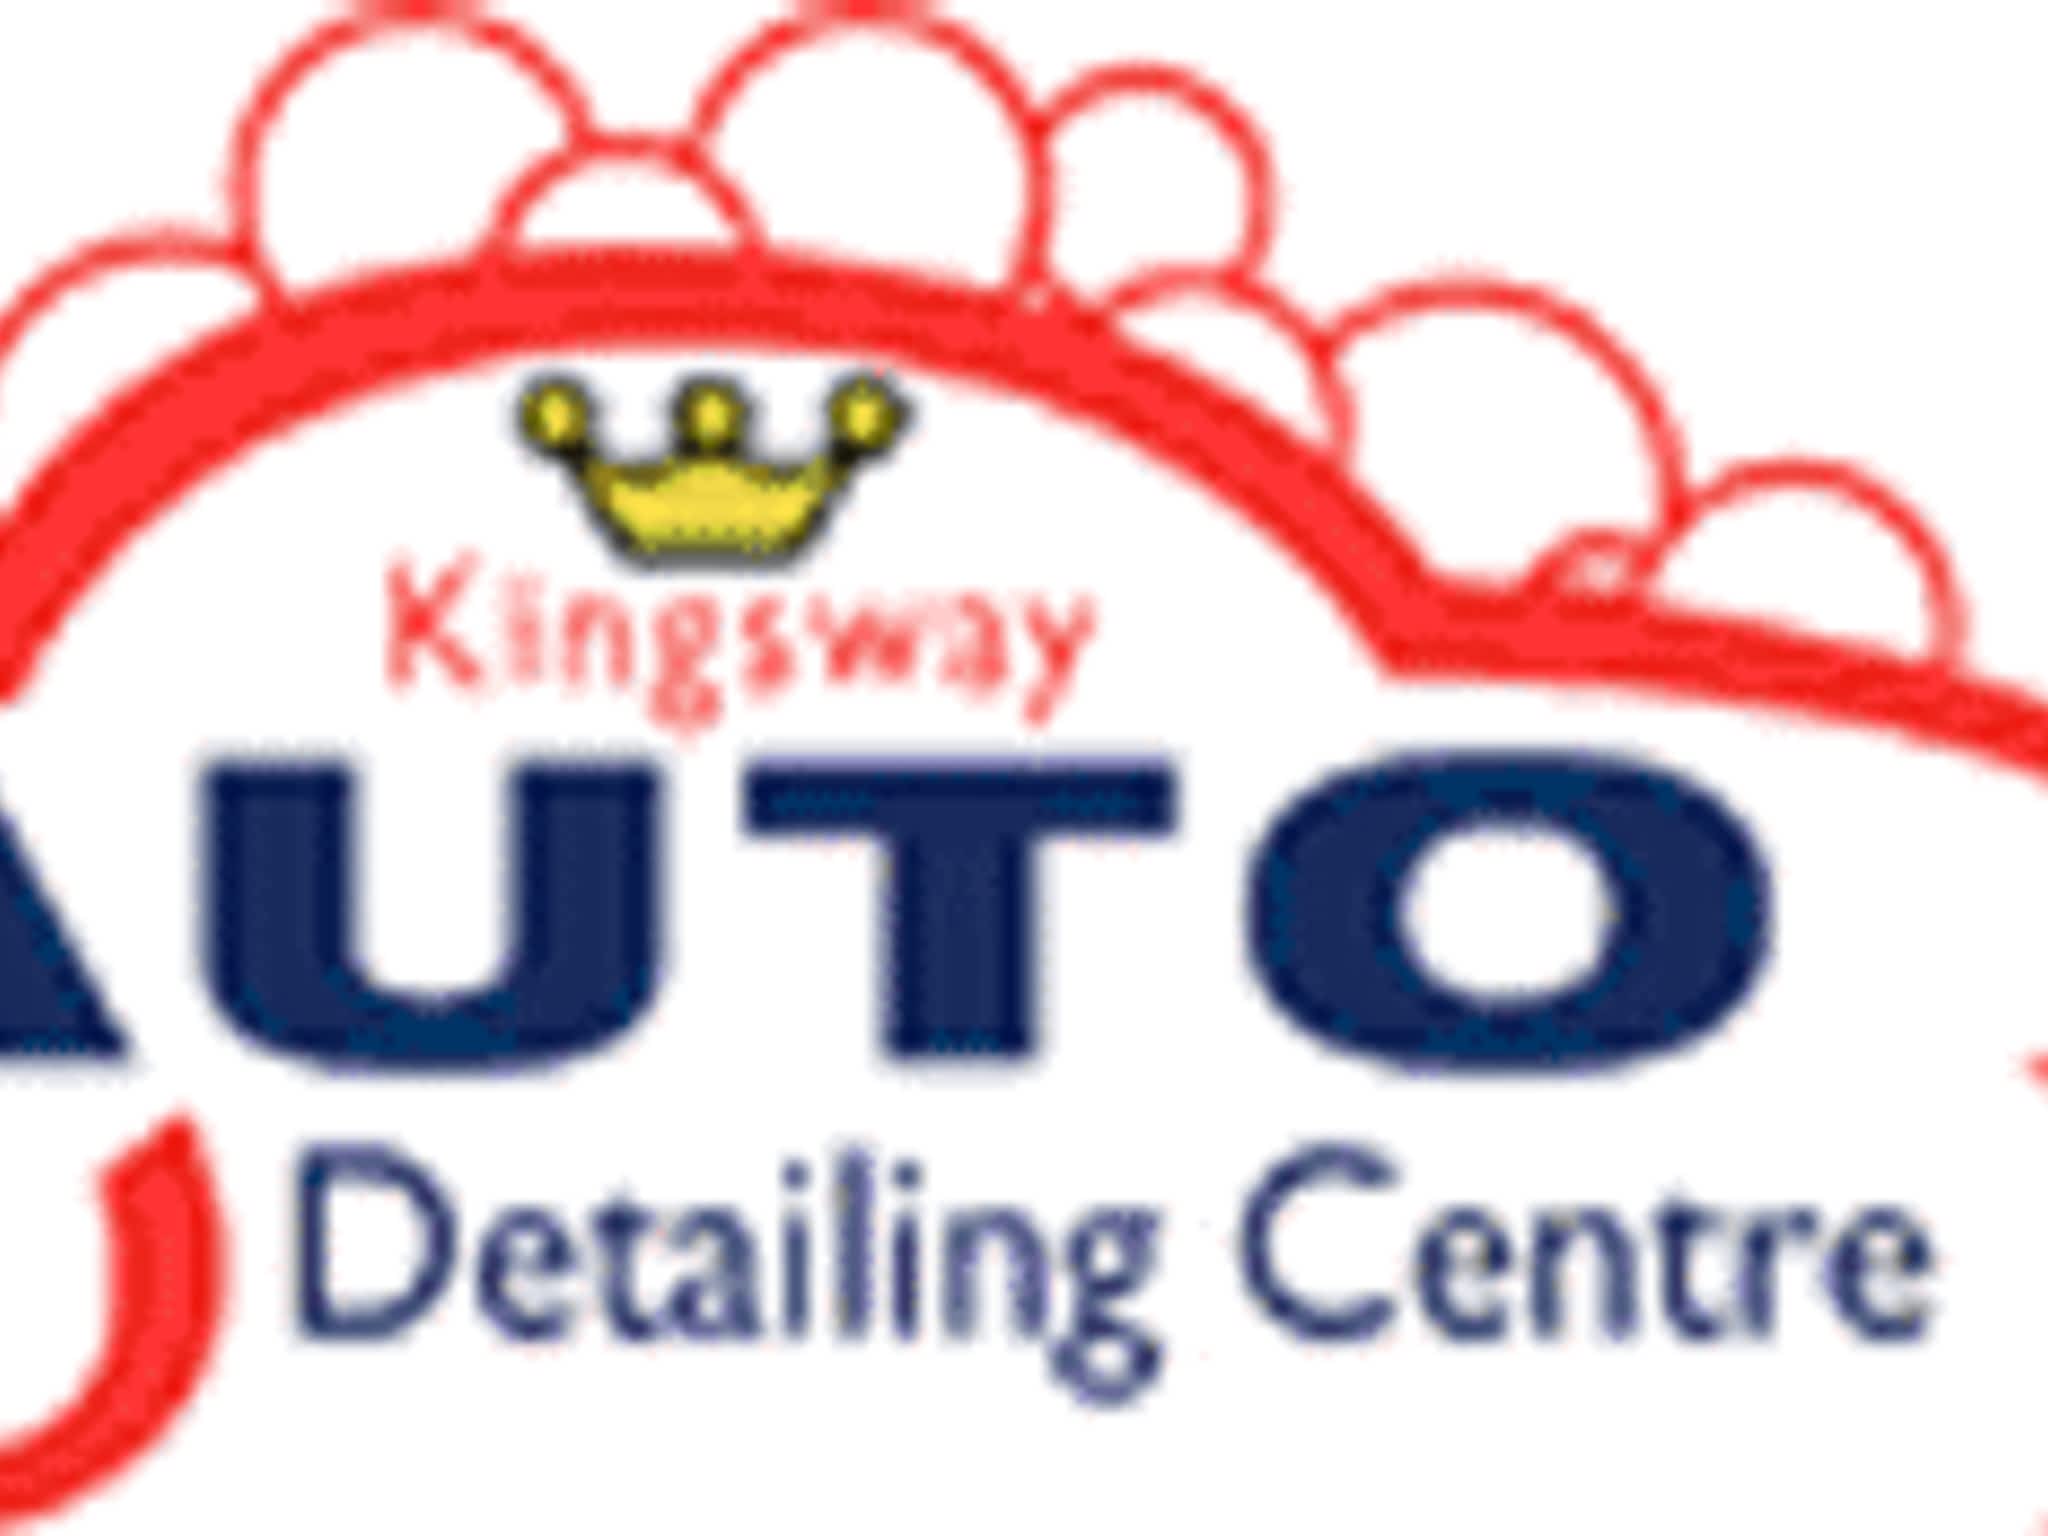 photo Kingsway Auto Detailing Centre